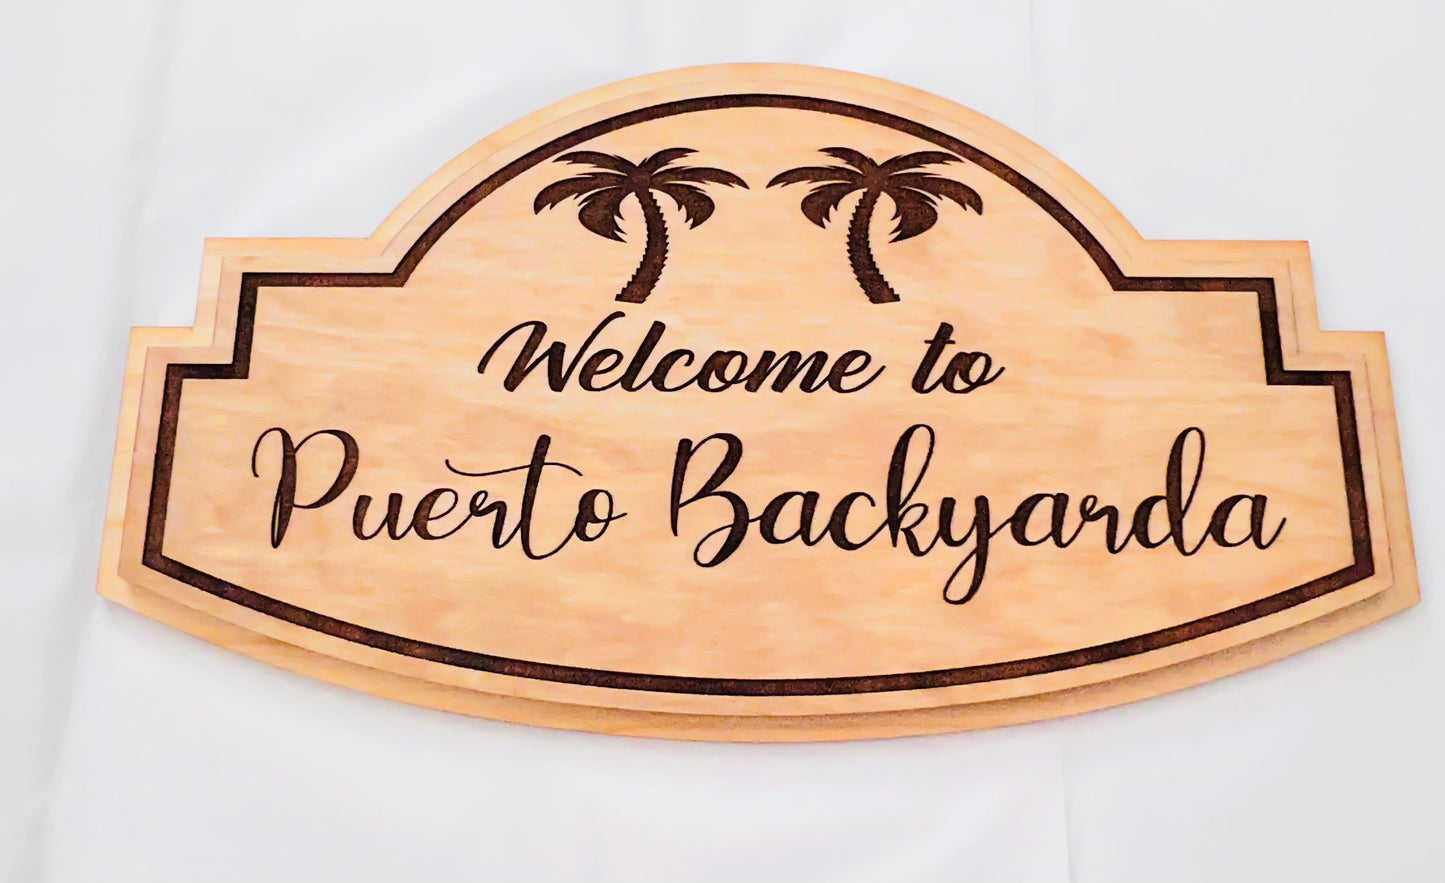 Welcome To Puerto Backyarda Sign Wood Engraved